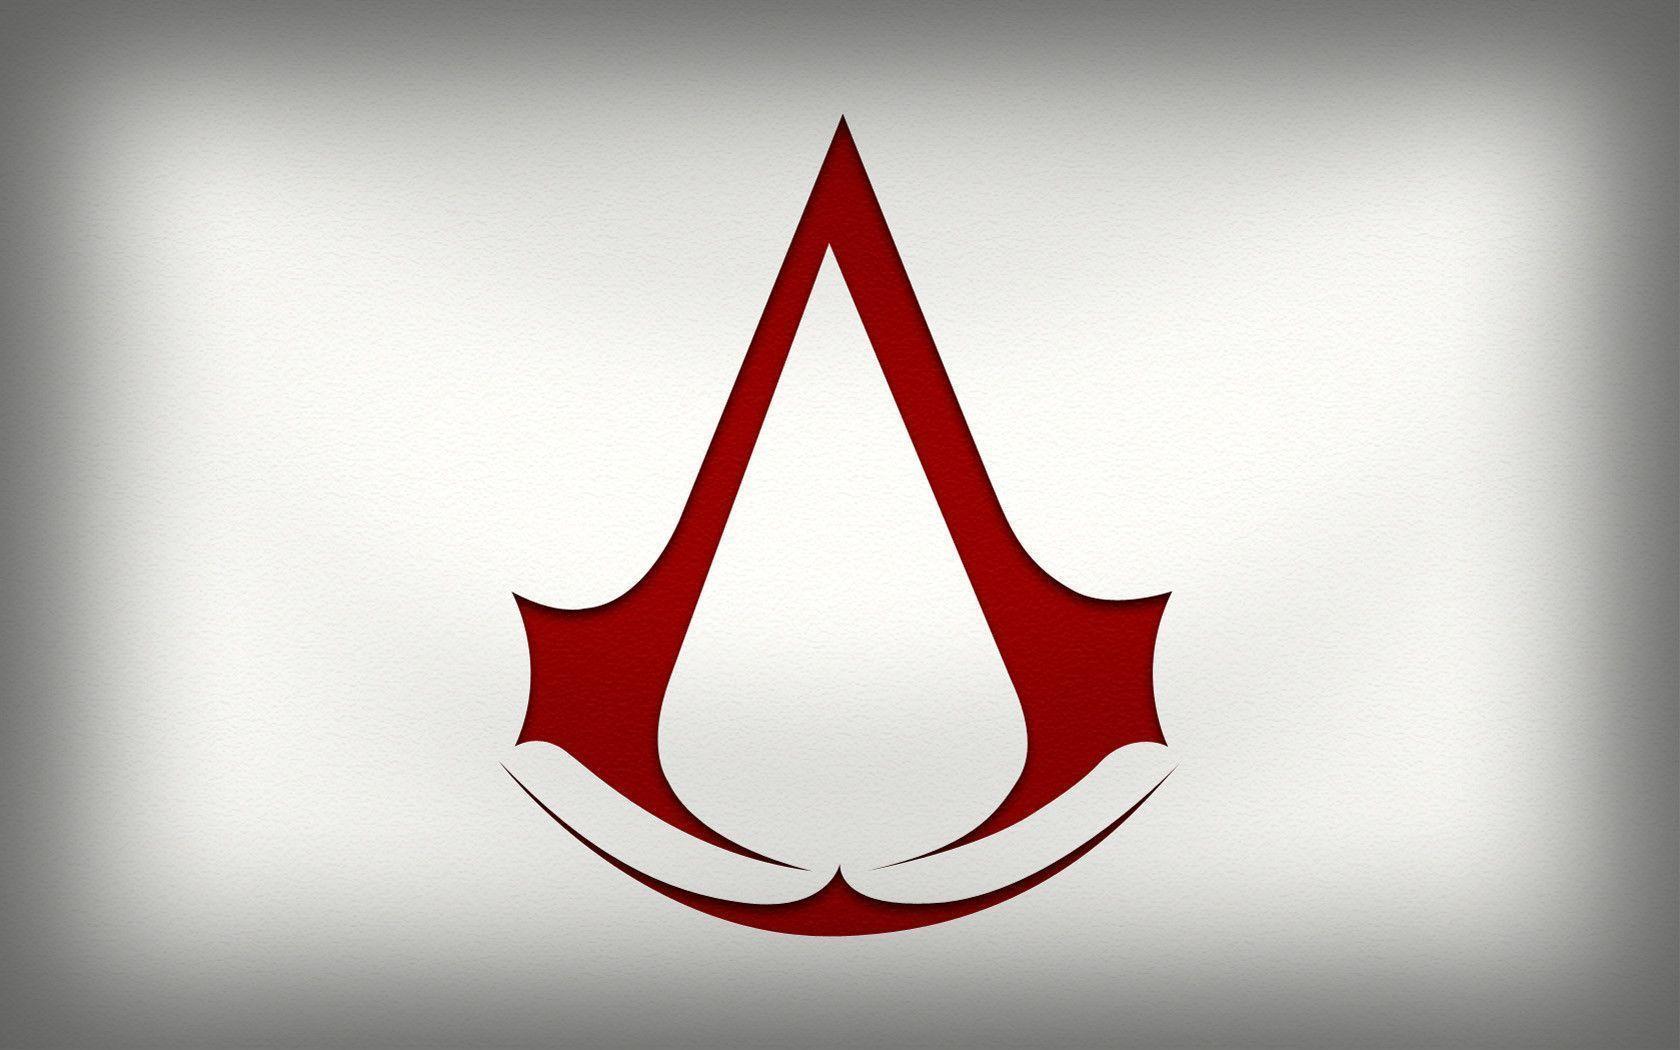 Assassins creed logo&;s creed symbol wallpaper